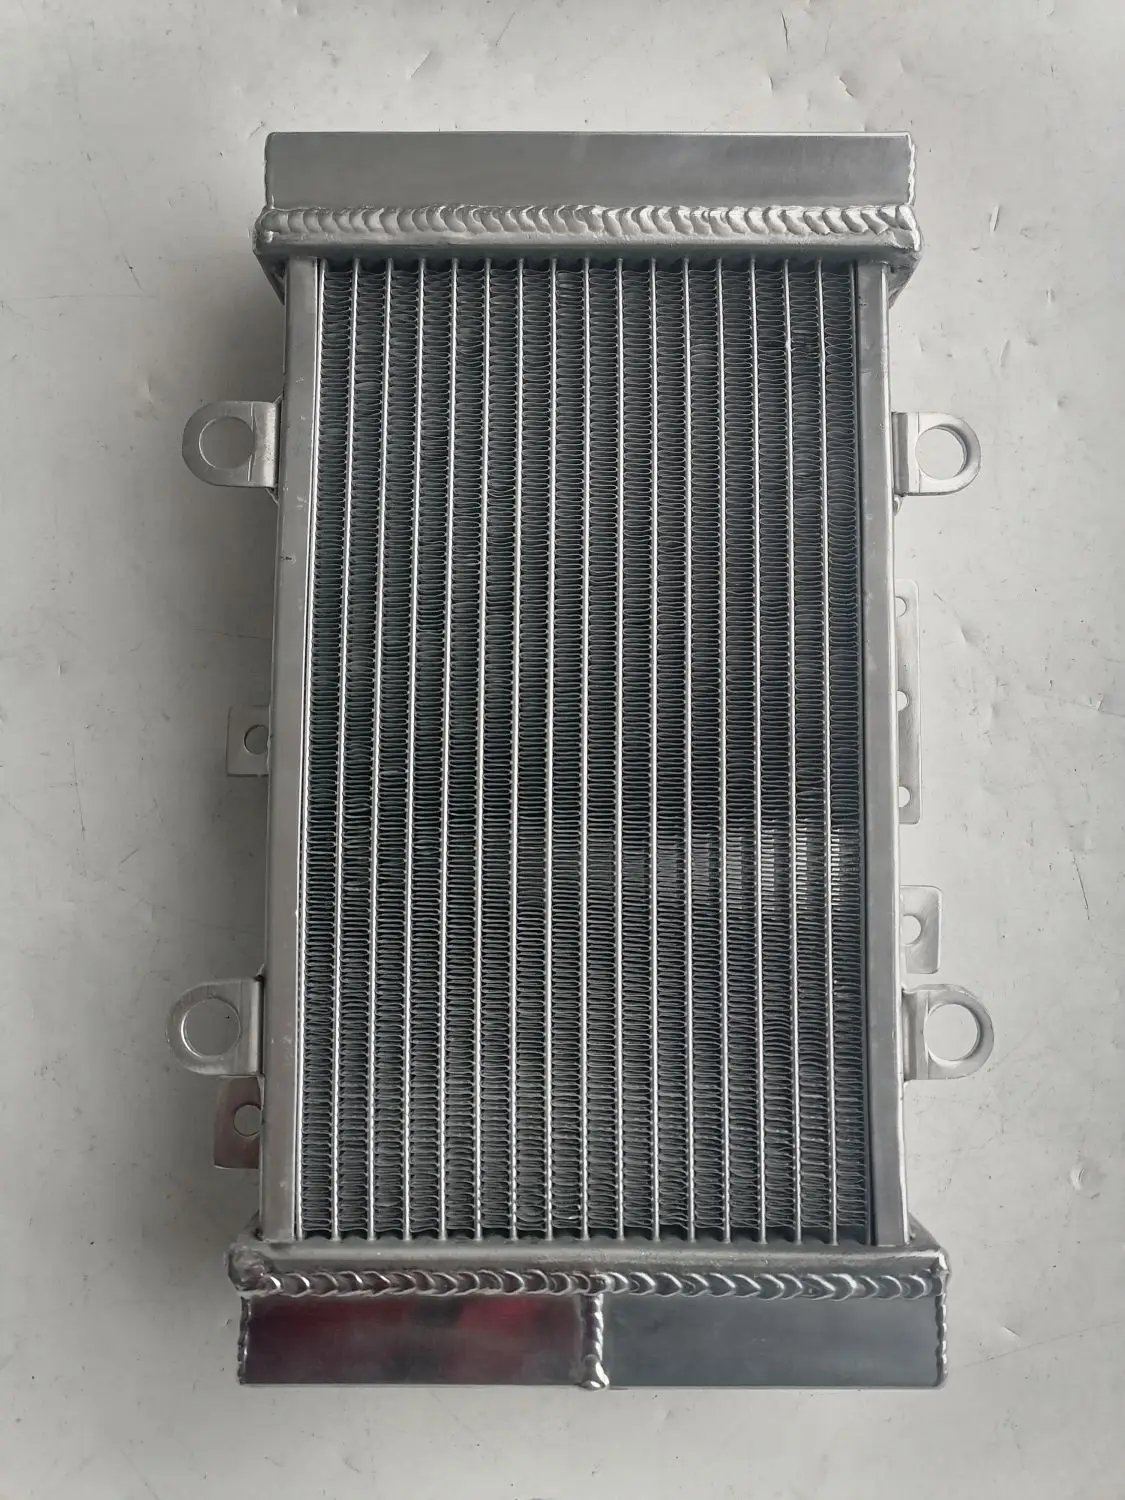 

For 2015 Hyosung Aquila 650 GV650 Aluminum Radiator Cooler Cooling Coolant